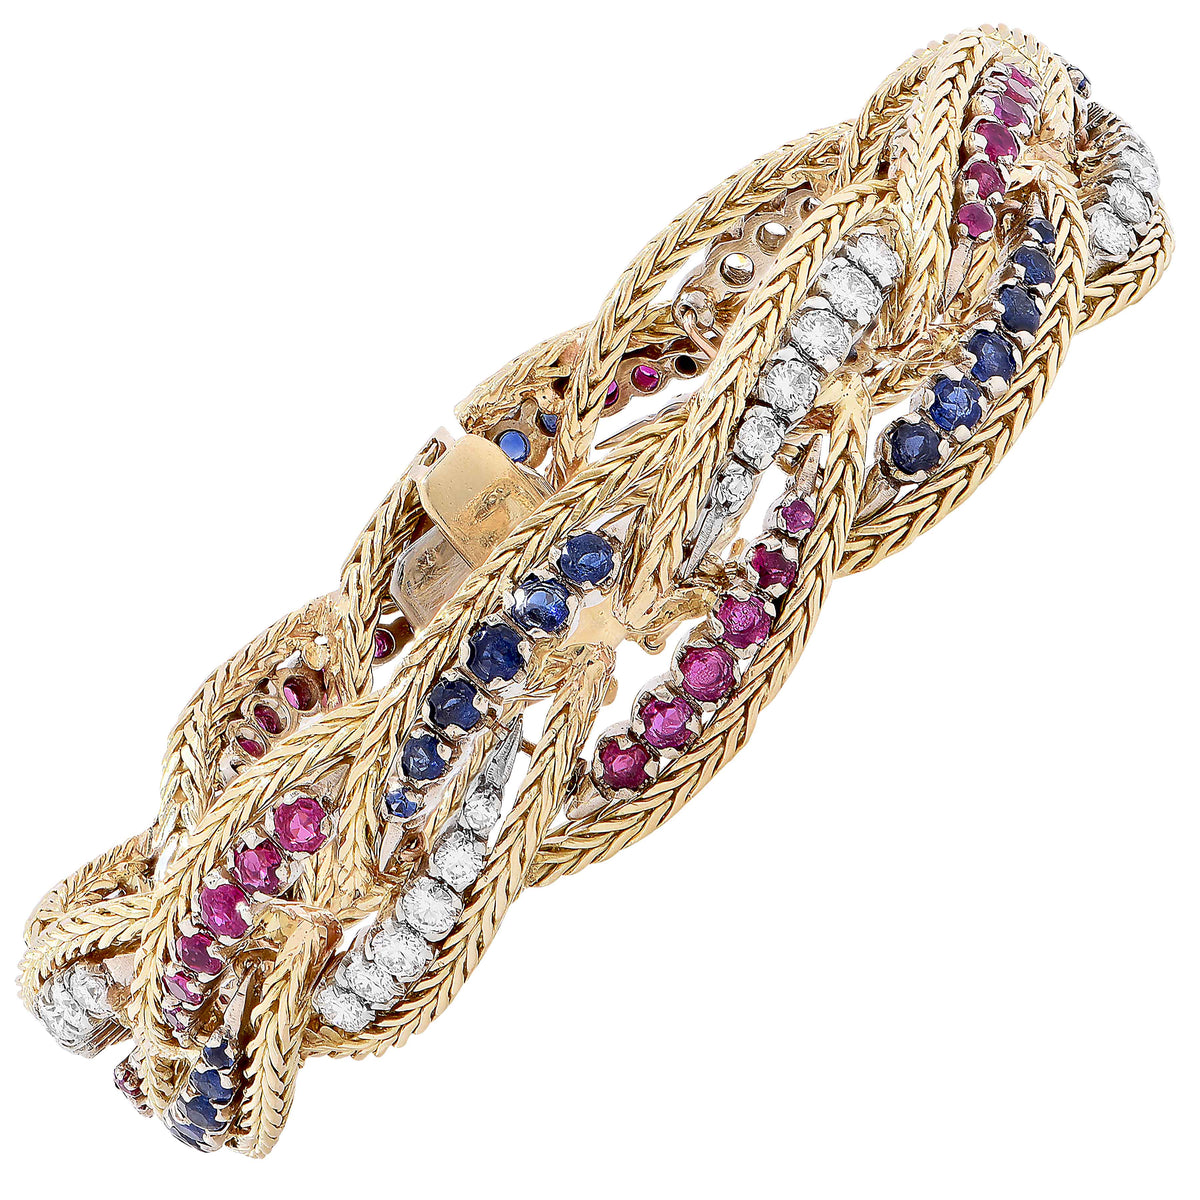 Ruby Sapphire Diamond Bracelet